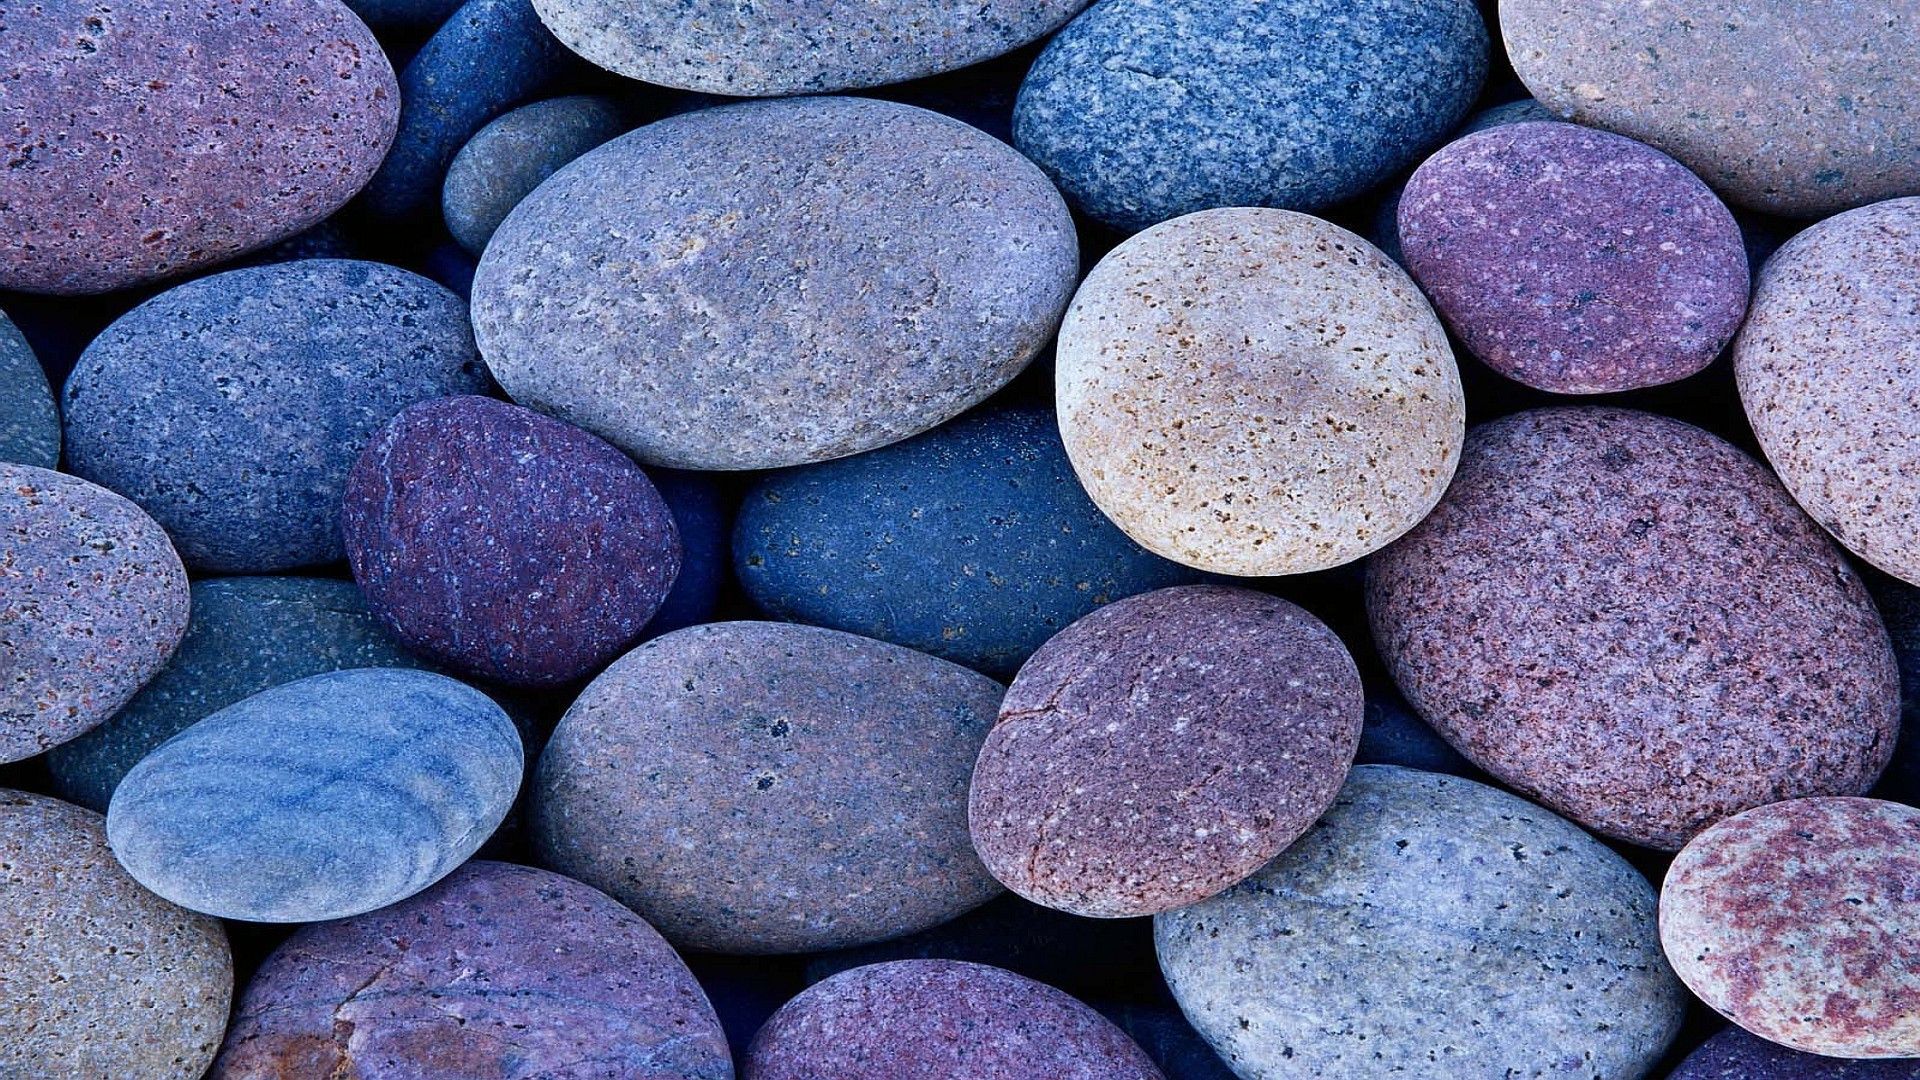 Pebbles and Rocks Wallpapers | Pebbles | Pinterest